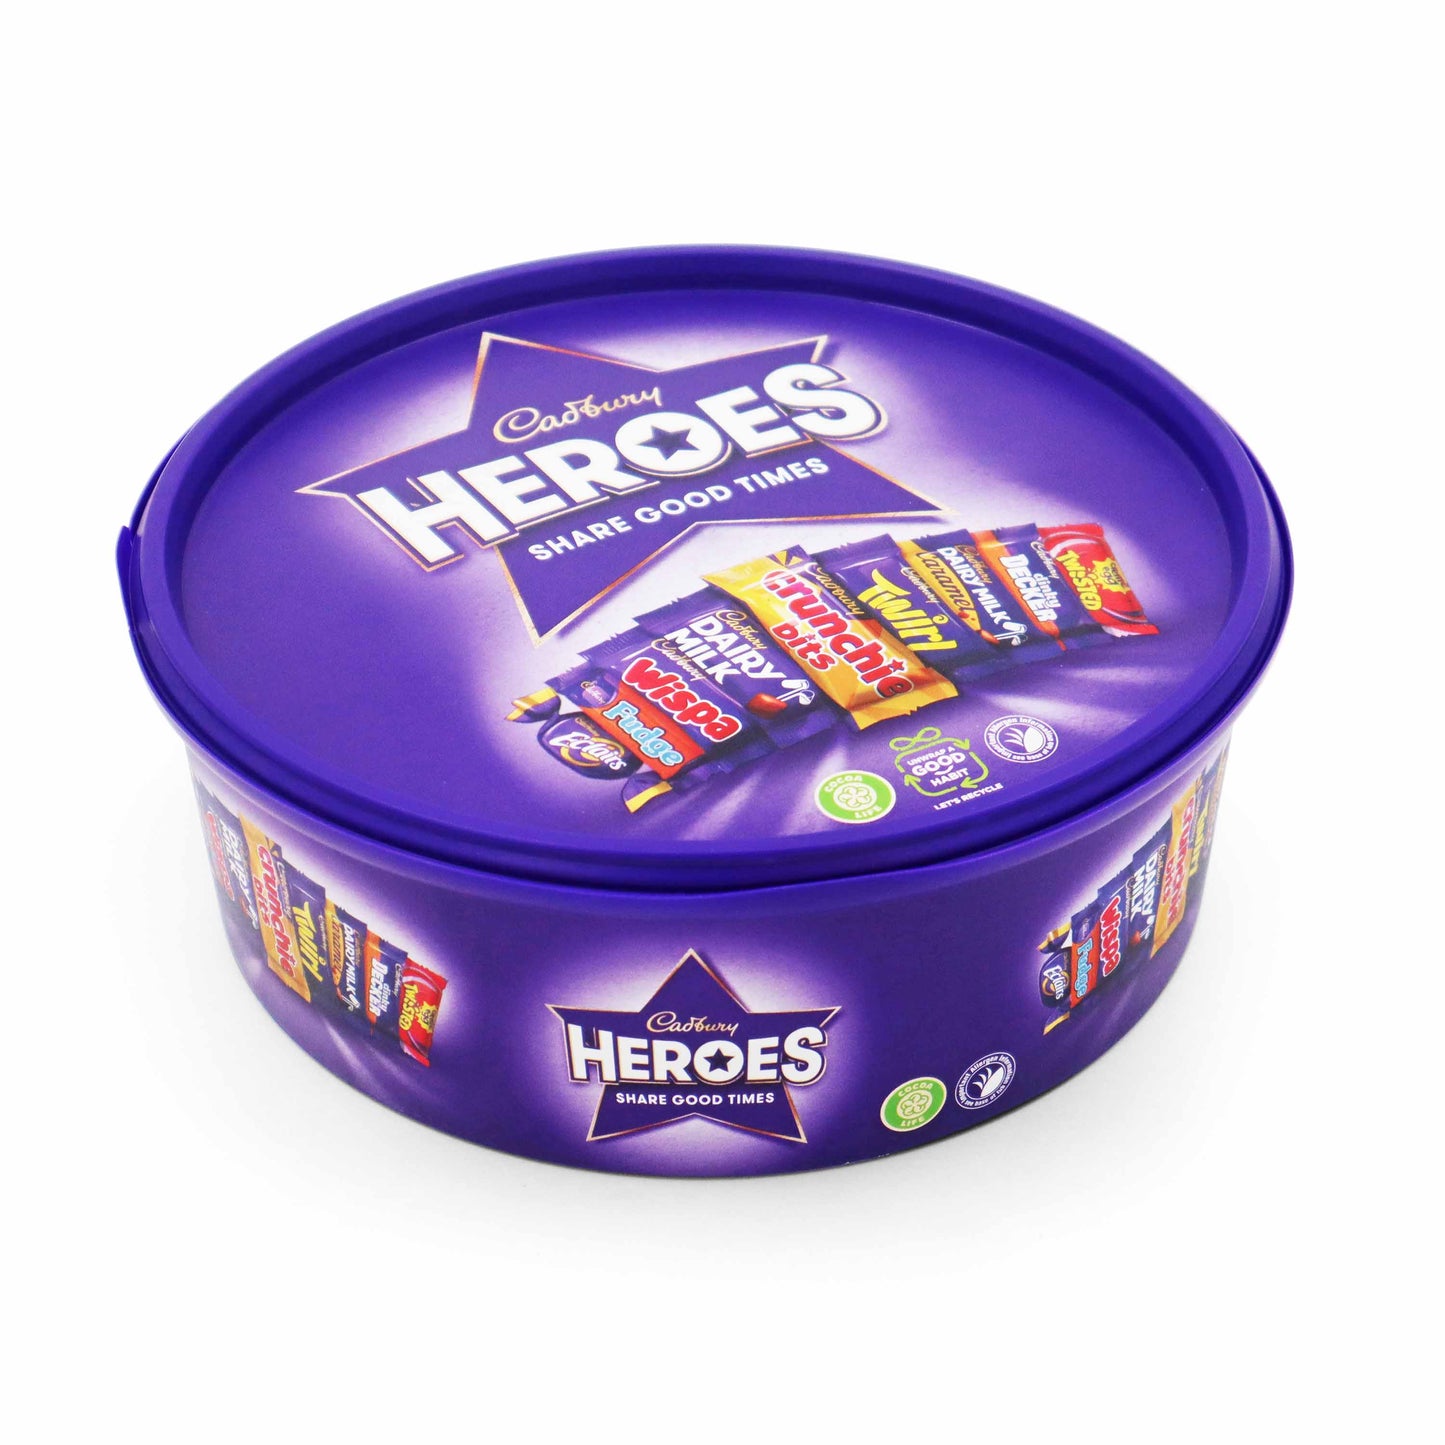 Cadbury Heroes Tub 550g - Chocolate Gift Set - Cadbury Chocolates